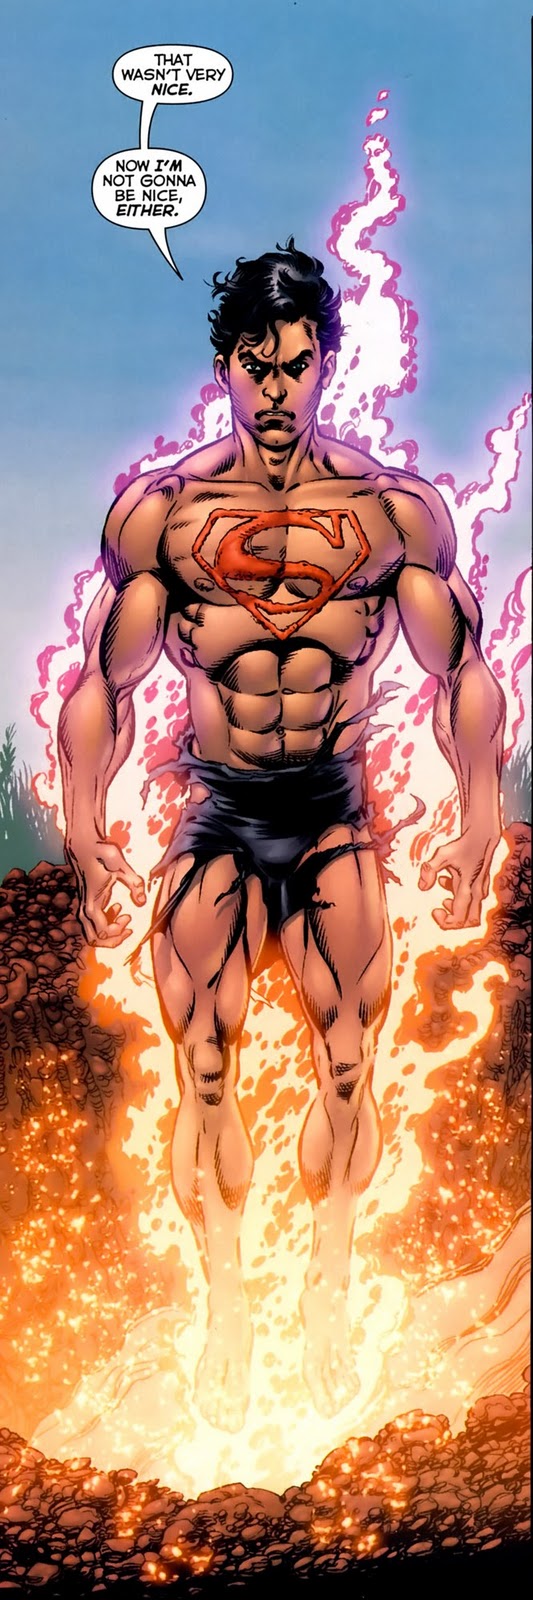 shirtless superheroes superboy prime in legion of worlds